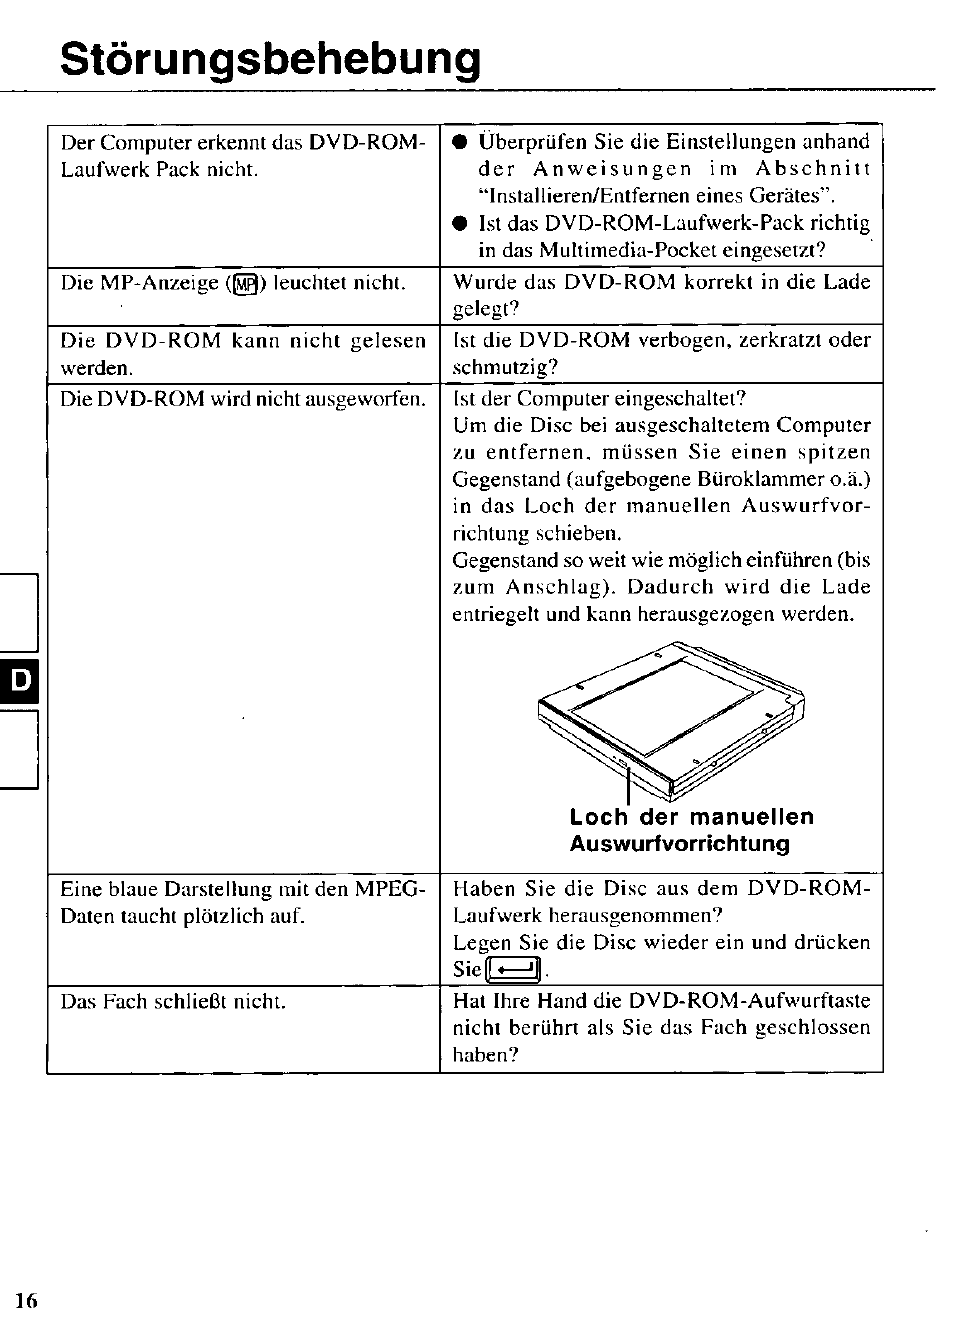 Störungsbehebung | Panasonic DVD-ROM CF-VDD283 Manuel d'utilisation | Page 16 / 36